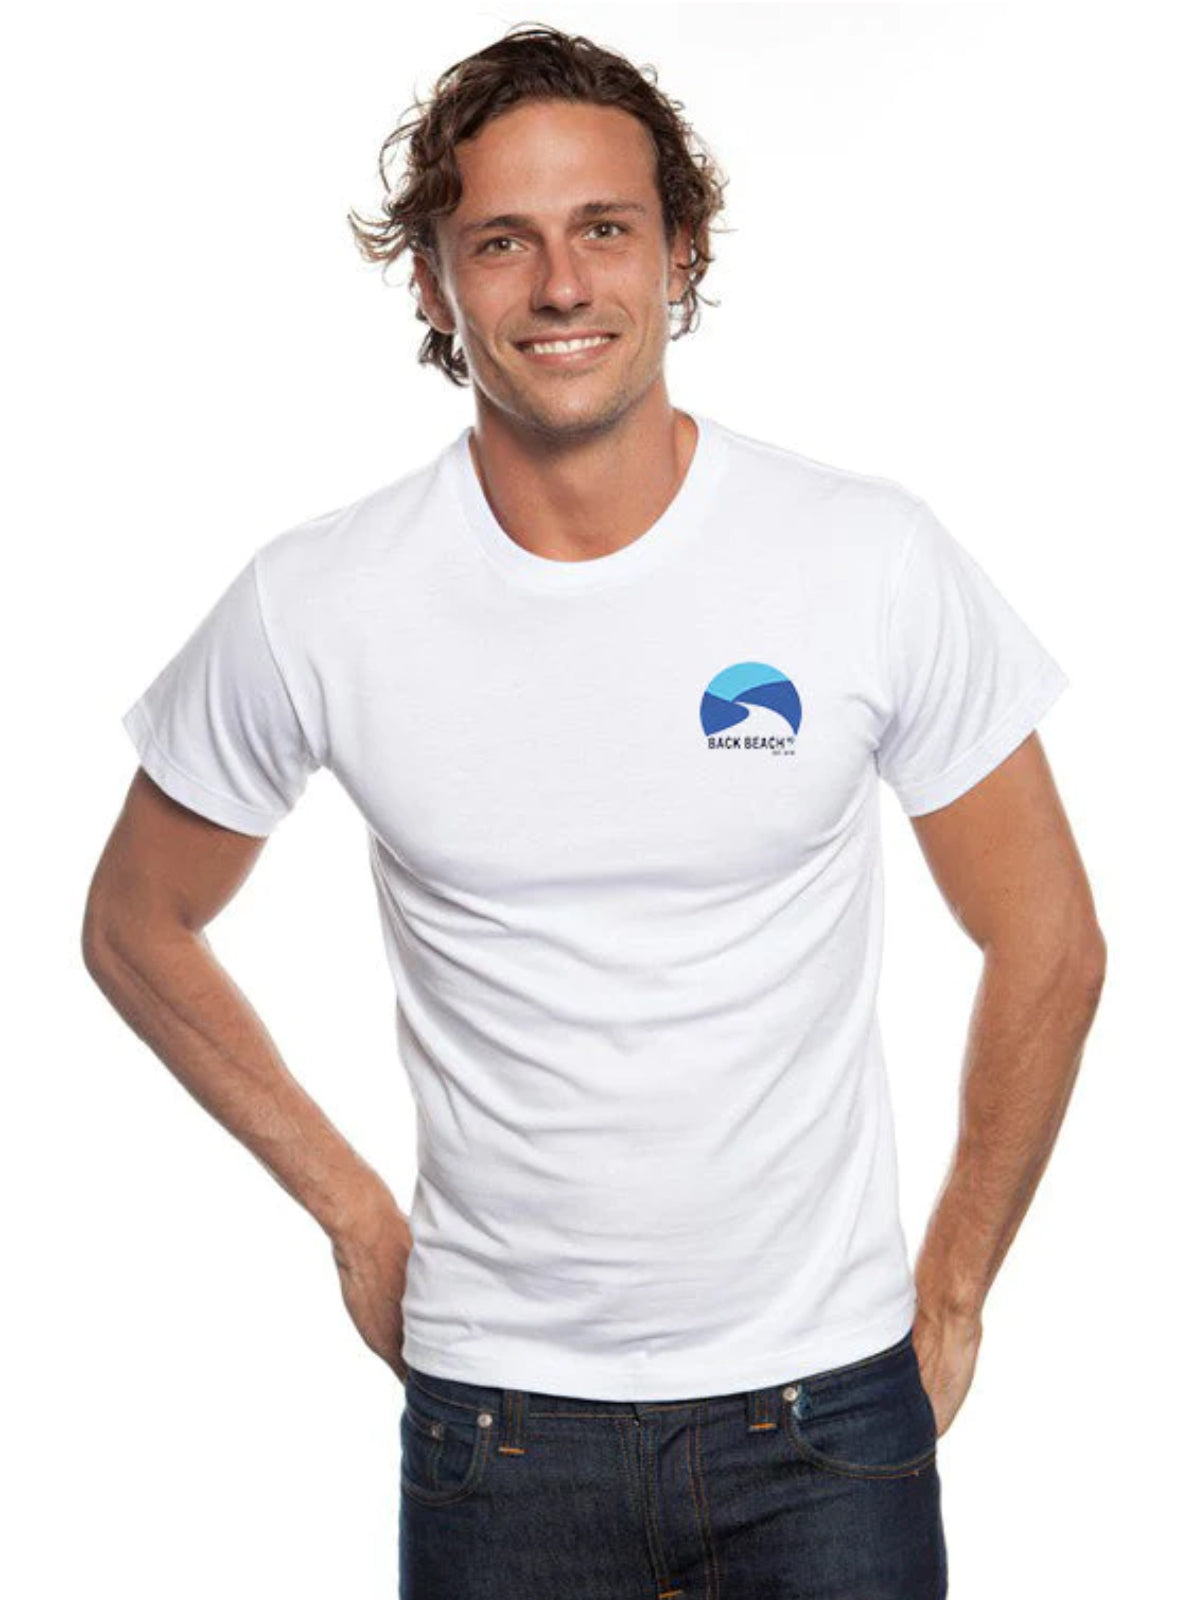 Unisex Australian Made Organic Cotton Tees T shirt - Back Beach Rd